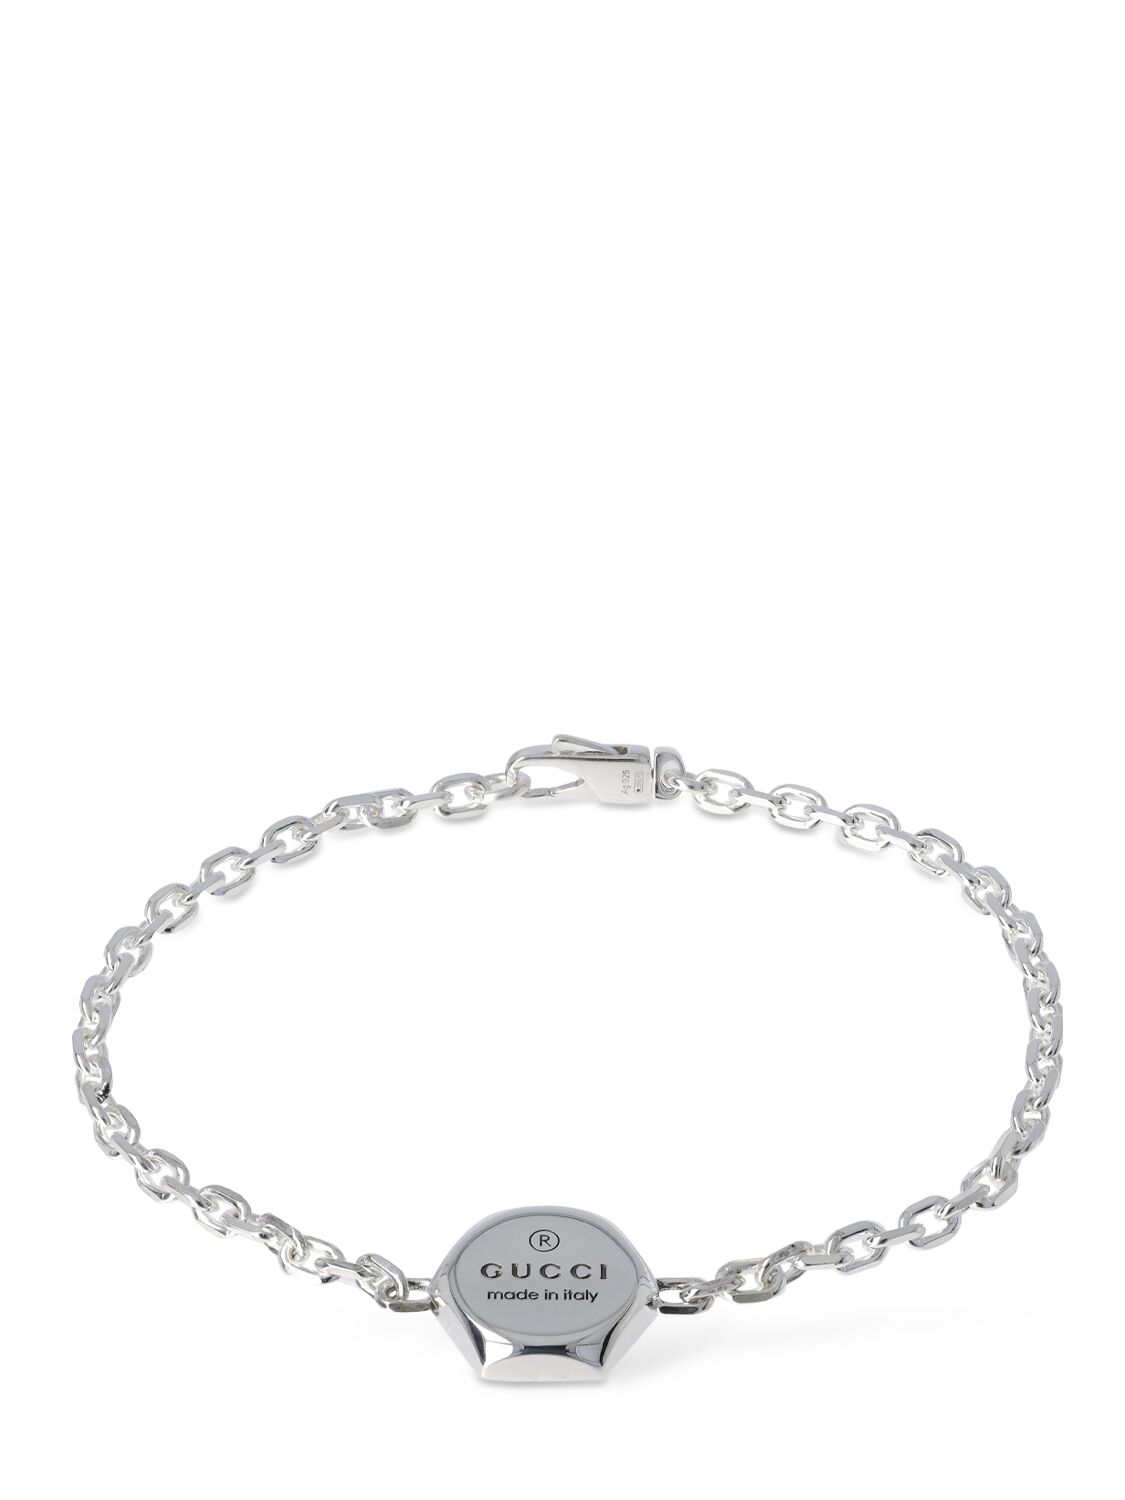 Trademark Sterling Silver Bracelet